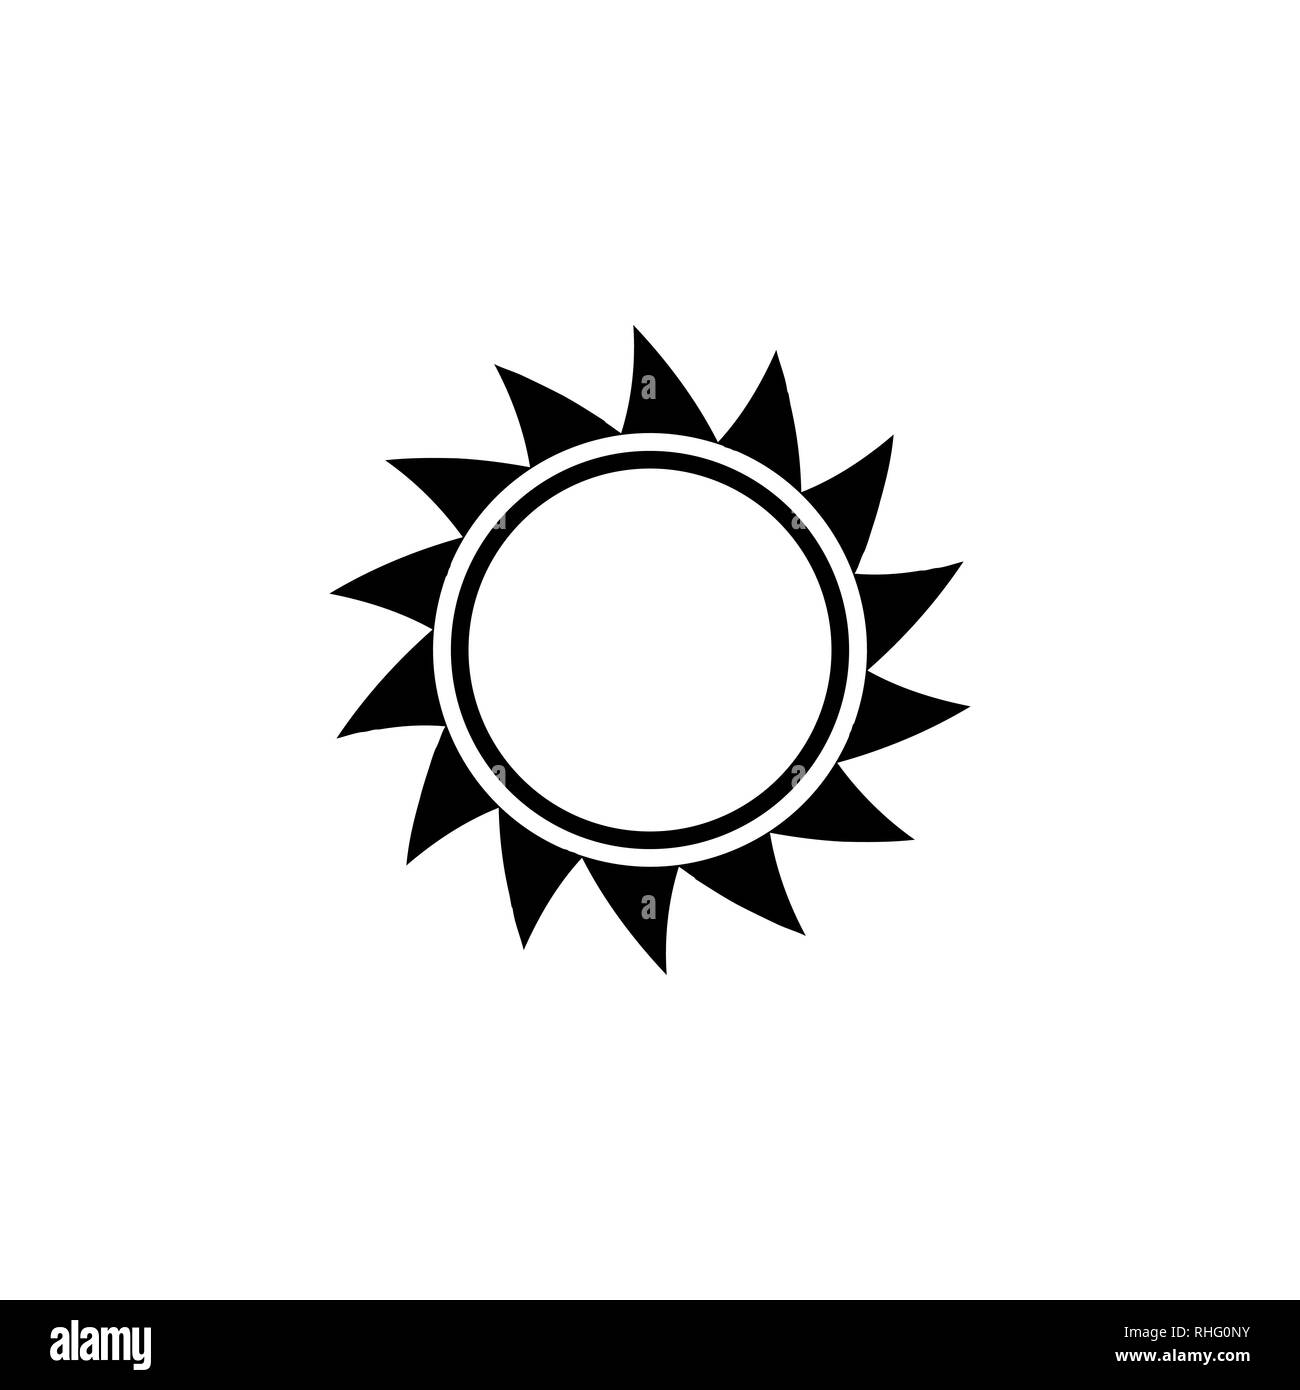 Sun vector icon on white background. Stock Vector